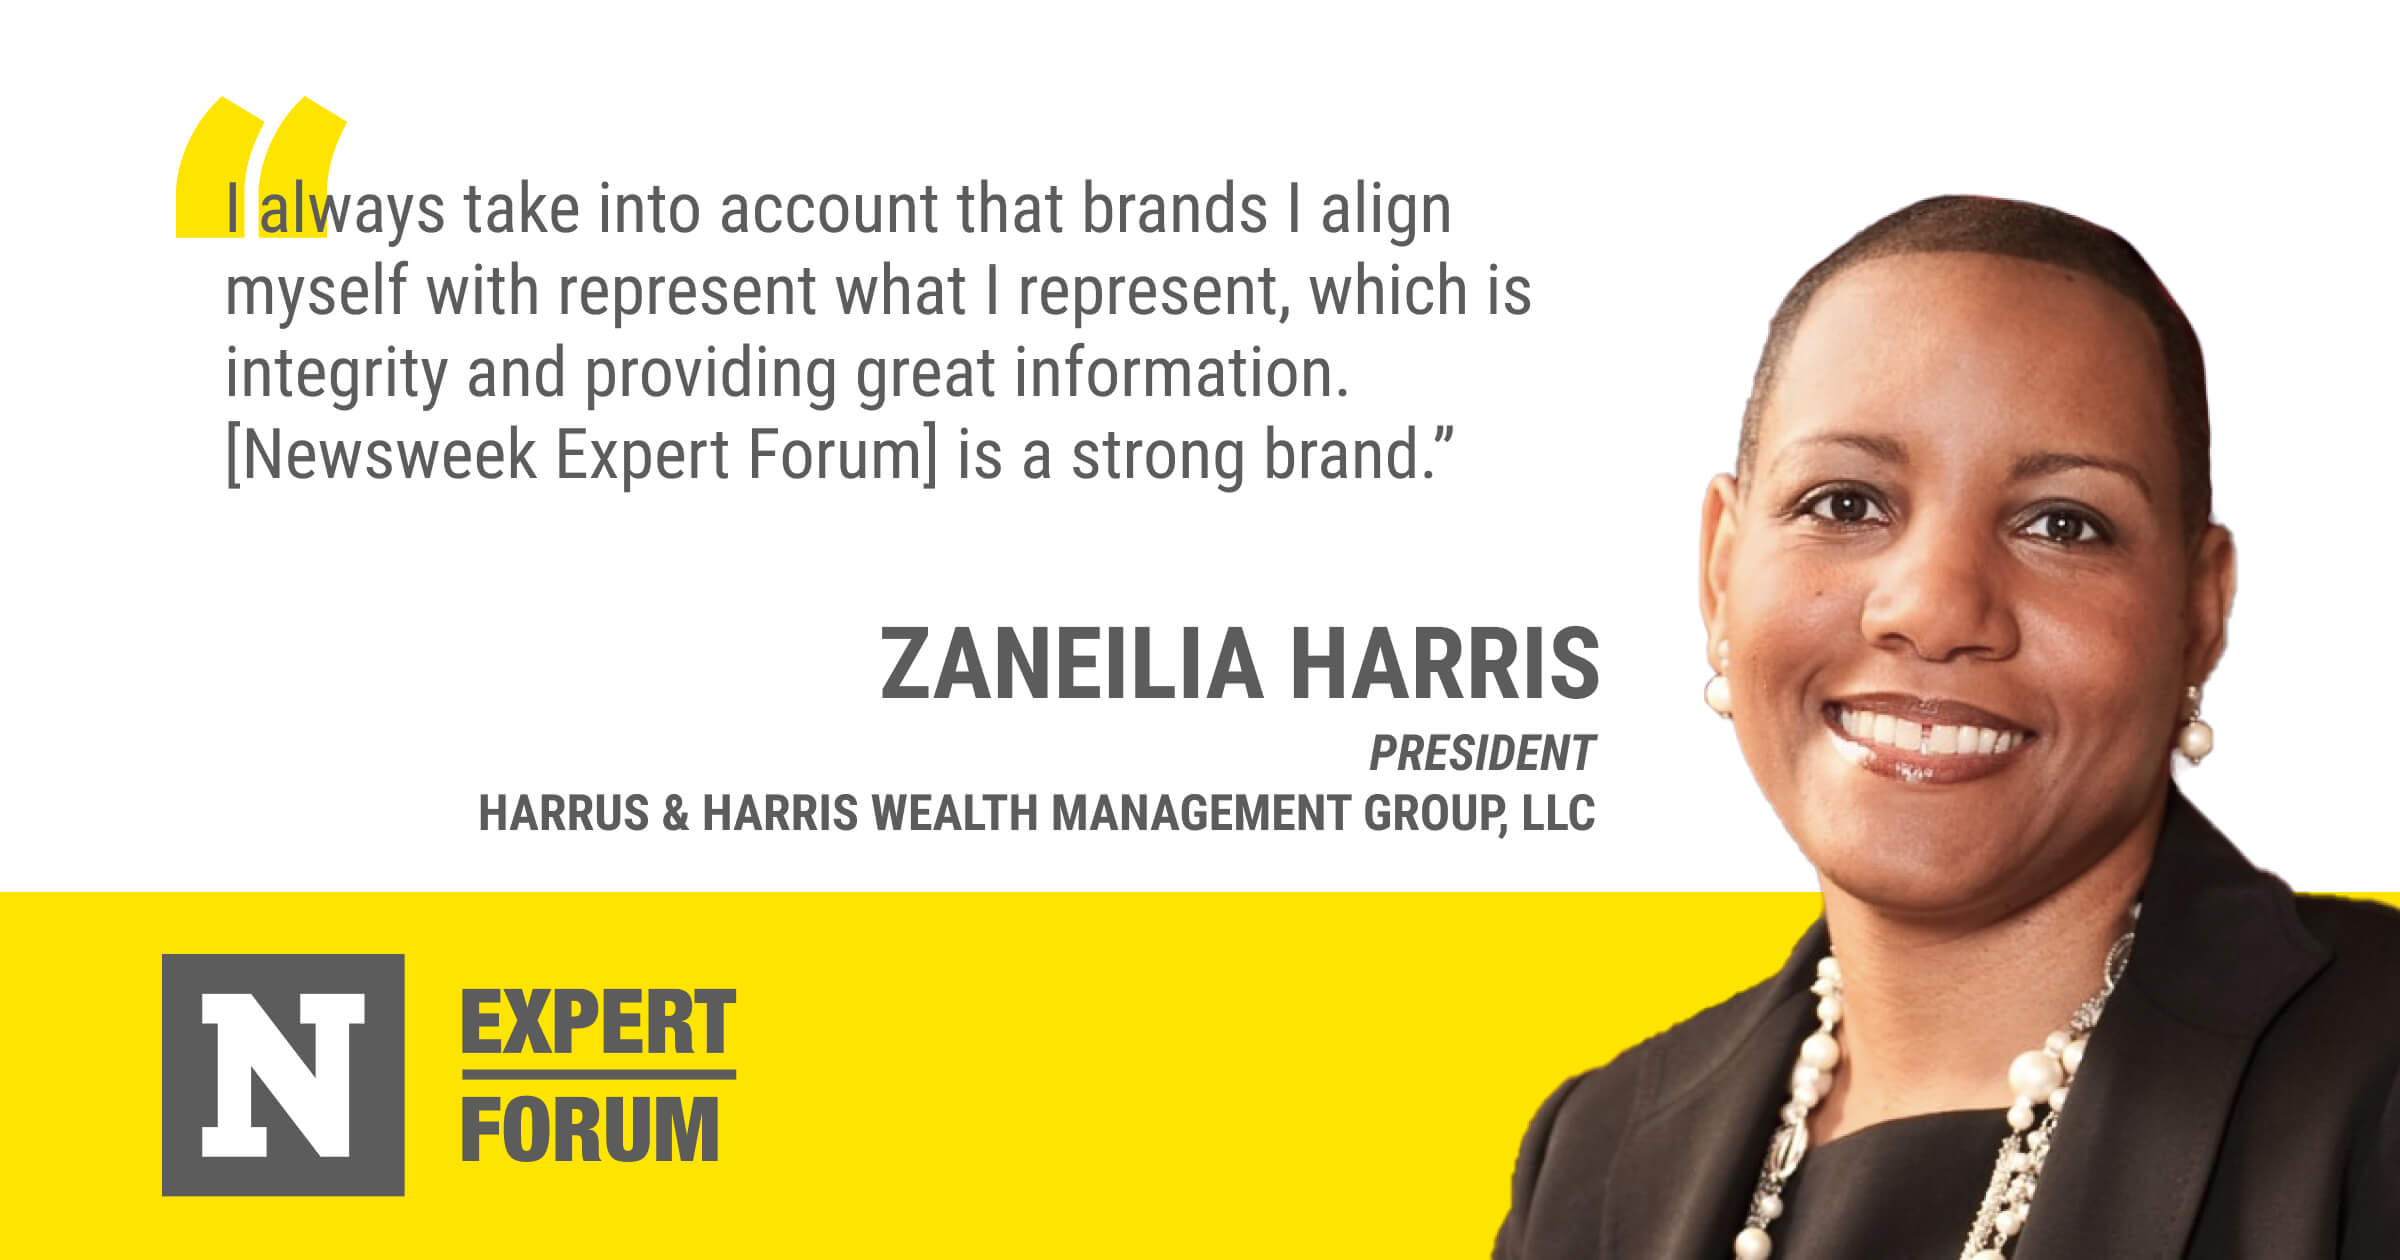 Zaneilia Harris, President of Harrus & Harris Wealth Management Group, L-L-C